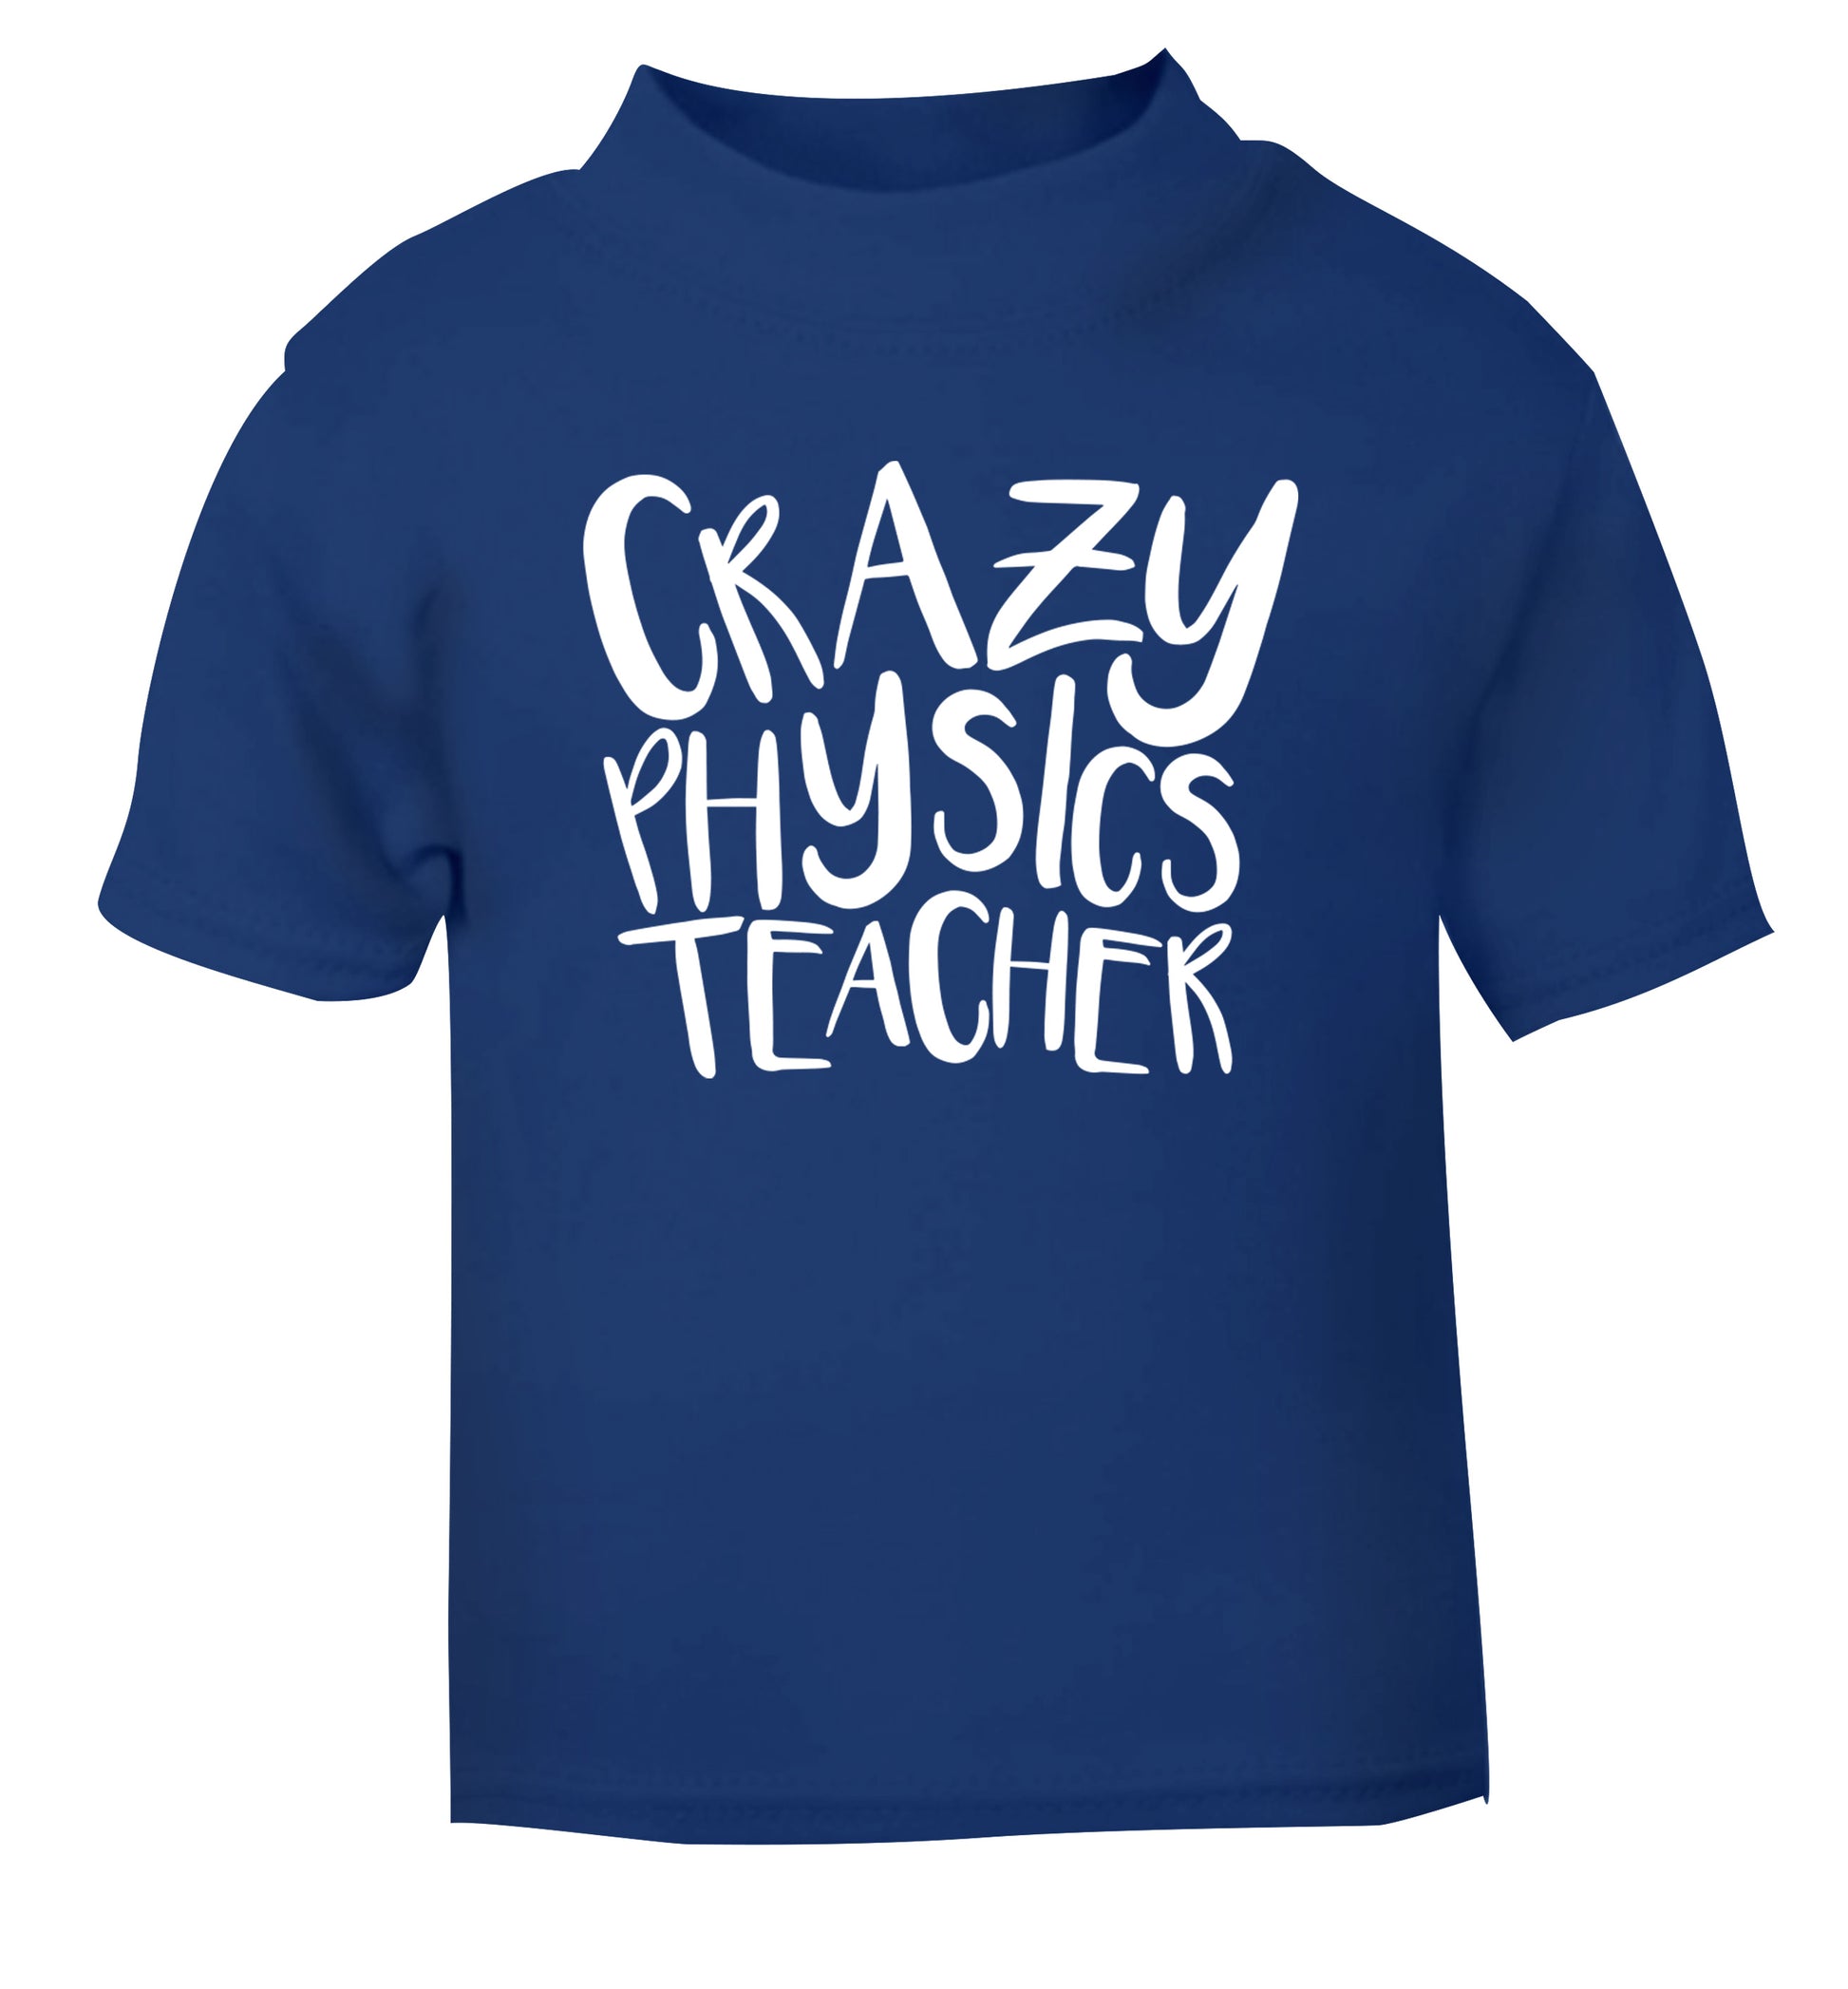 Crazy physics teacher blue Baby Toddler Tshirt 2 Years